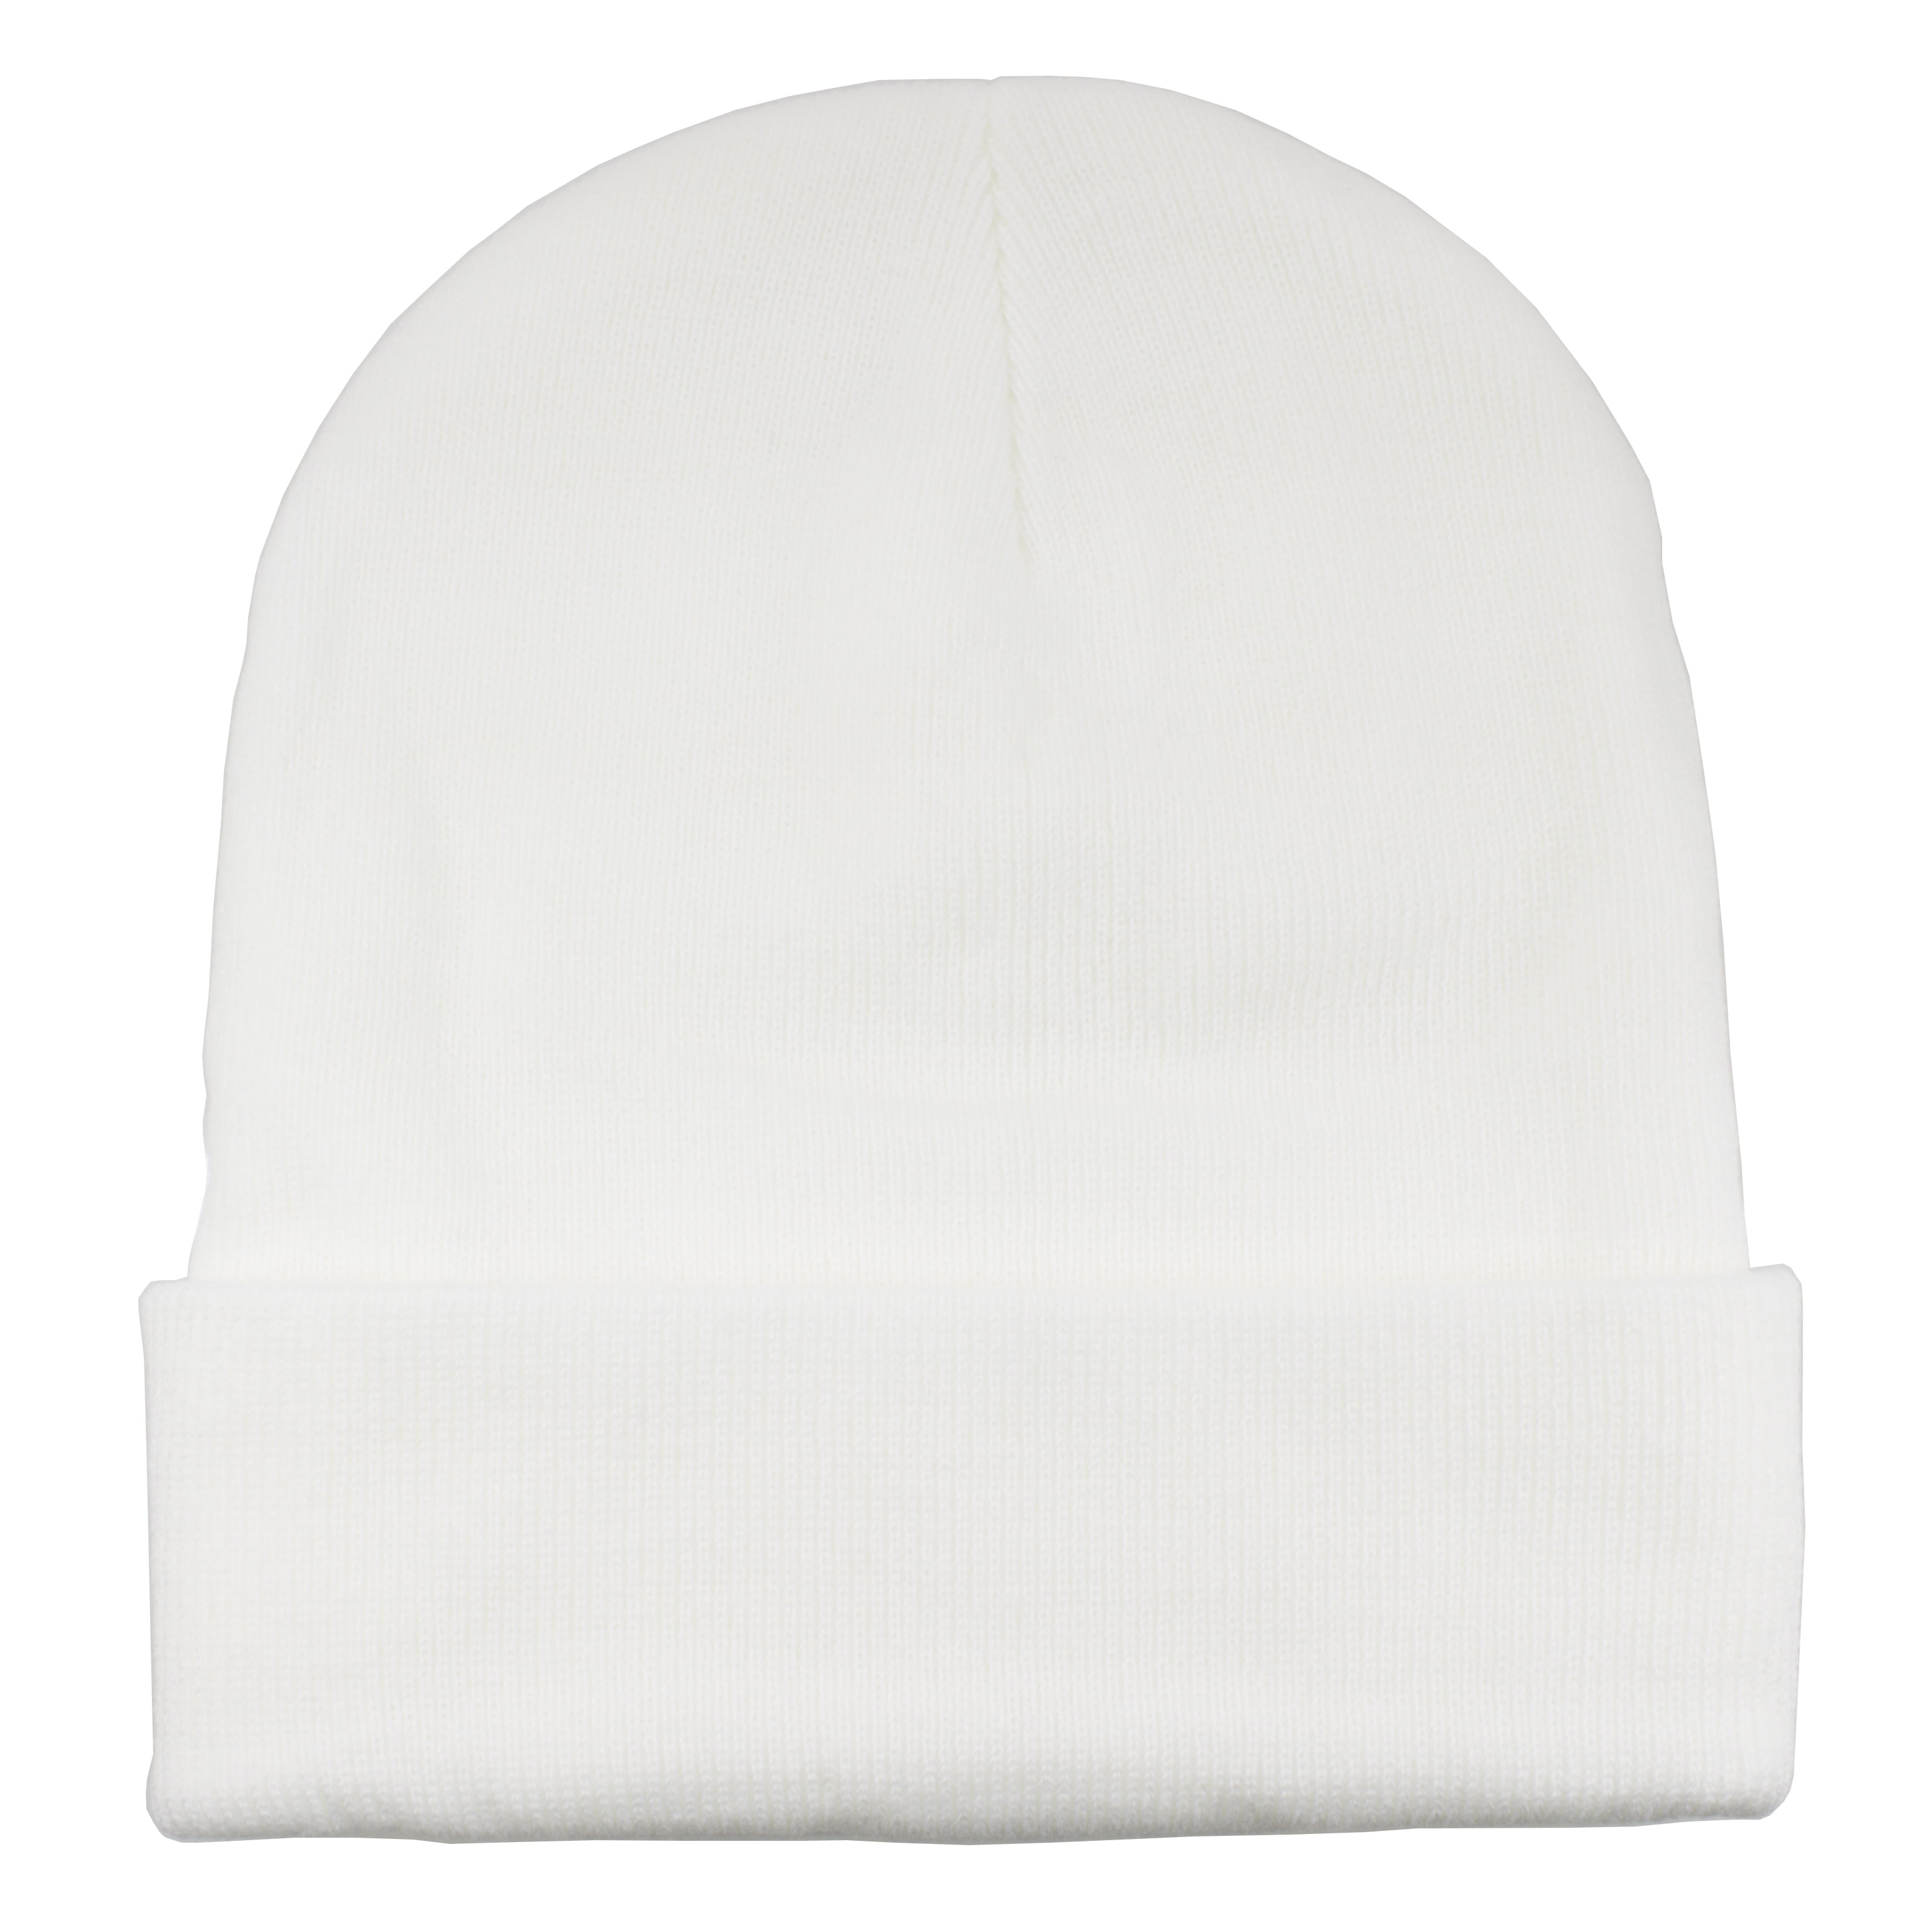 Gelante Beanie Cuffed White Hat Plain Men Classic - Women Knit Cap